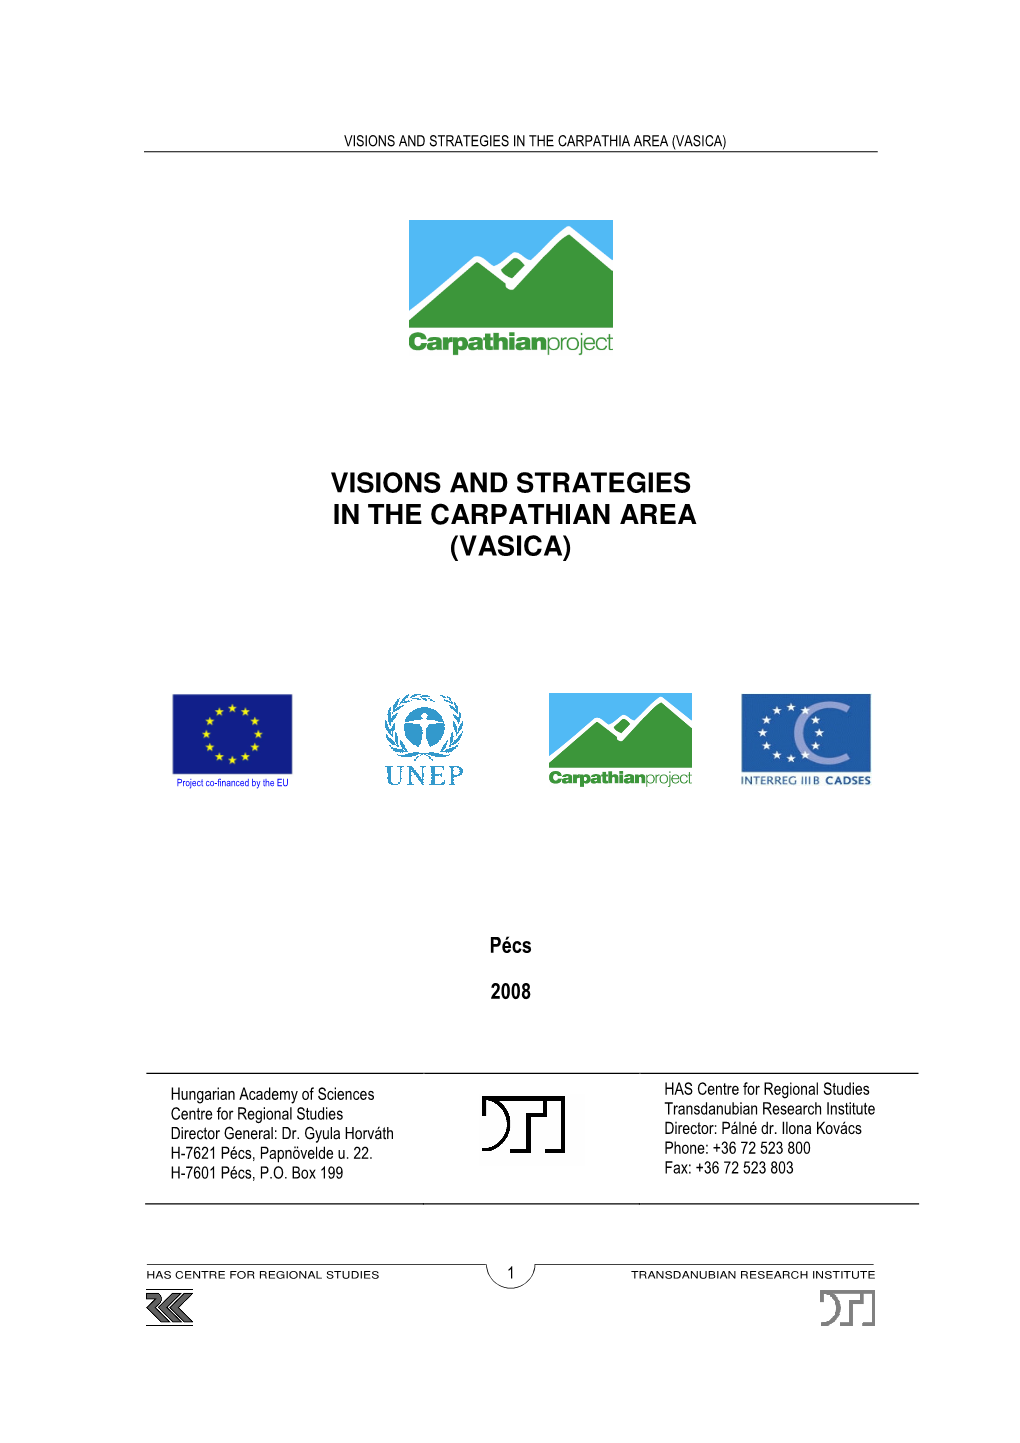 Visions and Strategies in the Carpathia Area (Vasica)